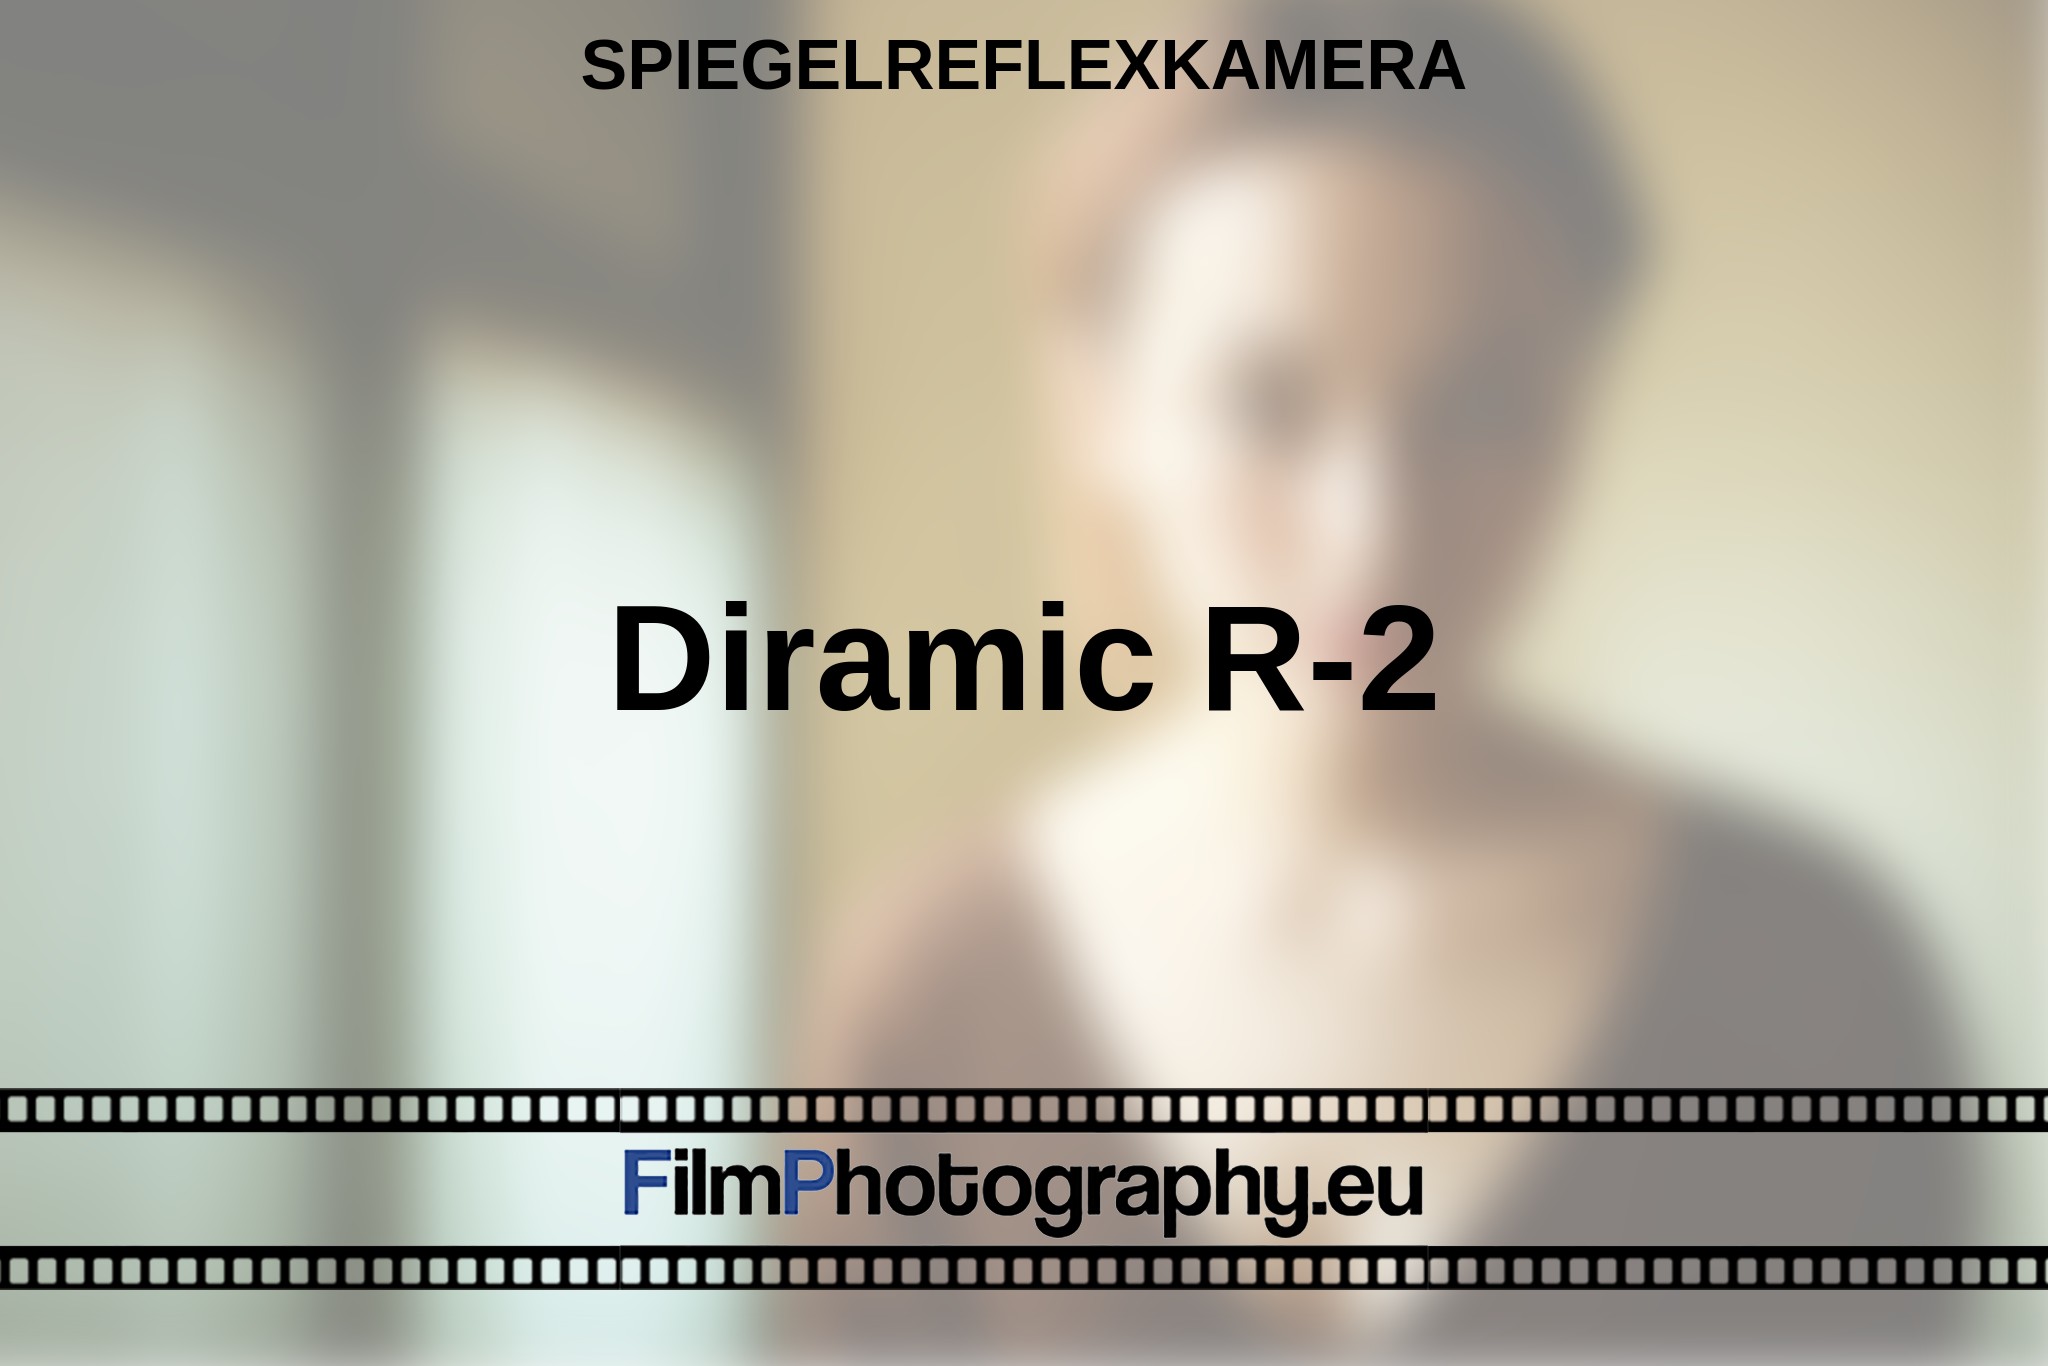 diramic-r-2-spiegelreflexkamera-bnv.jpg